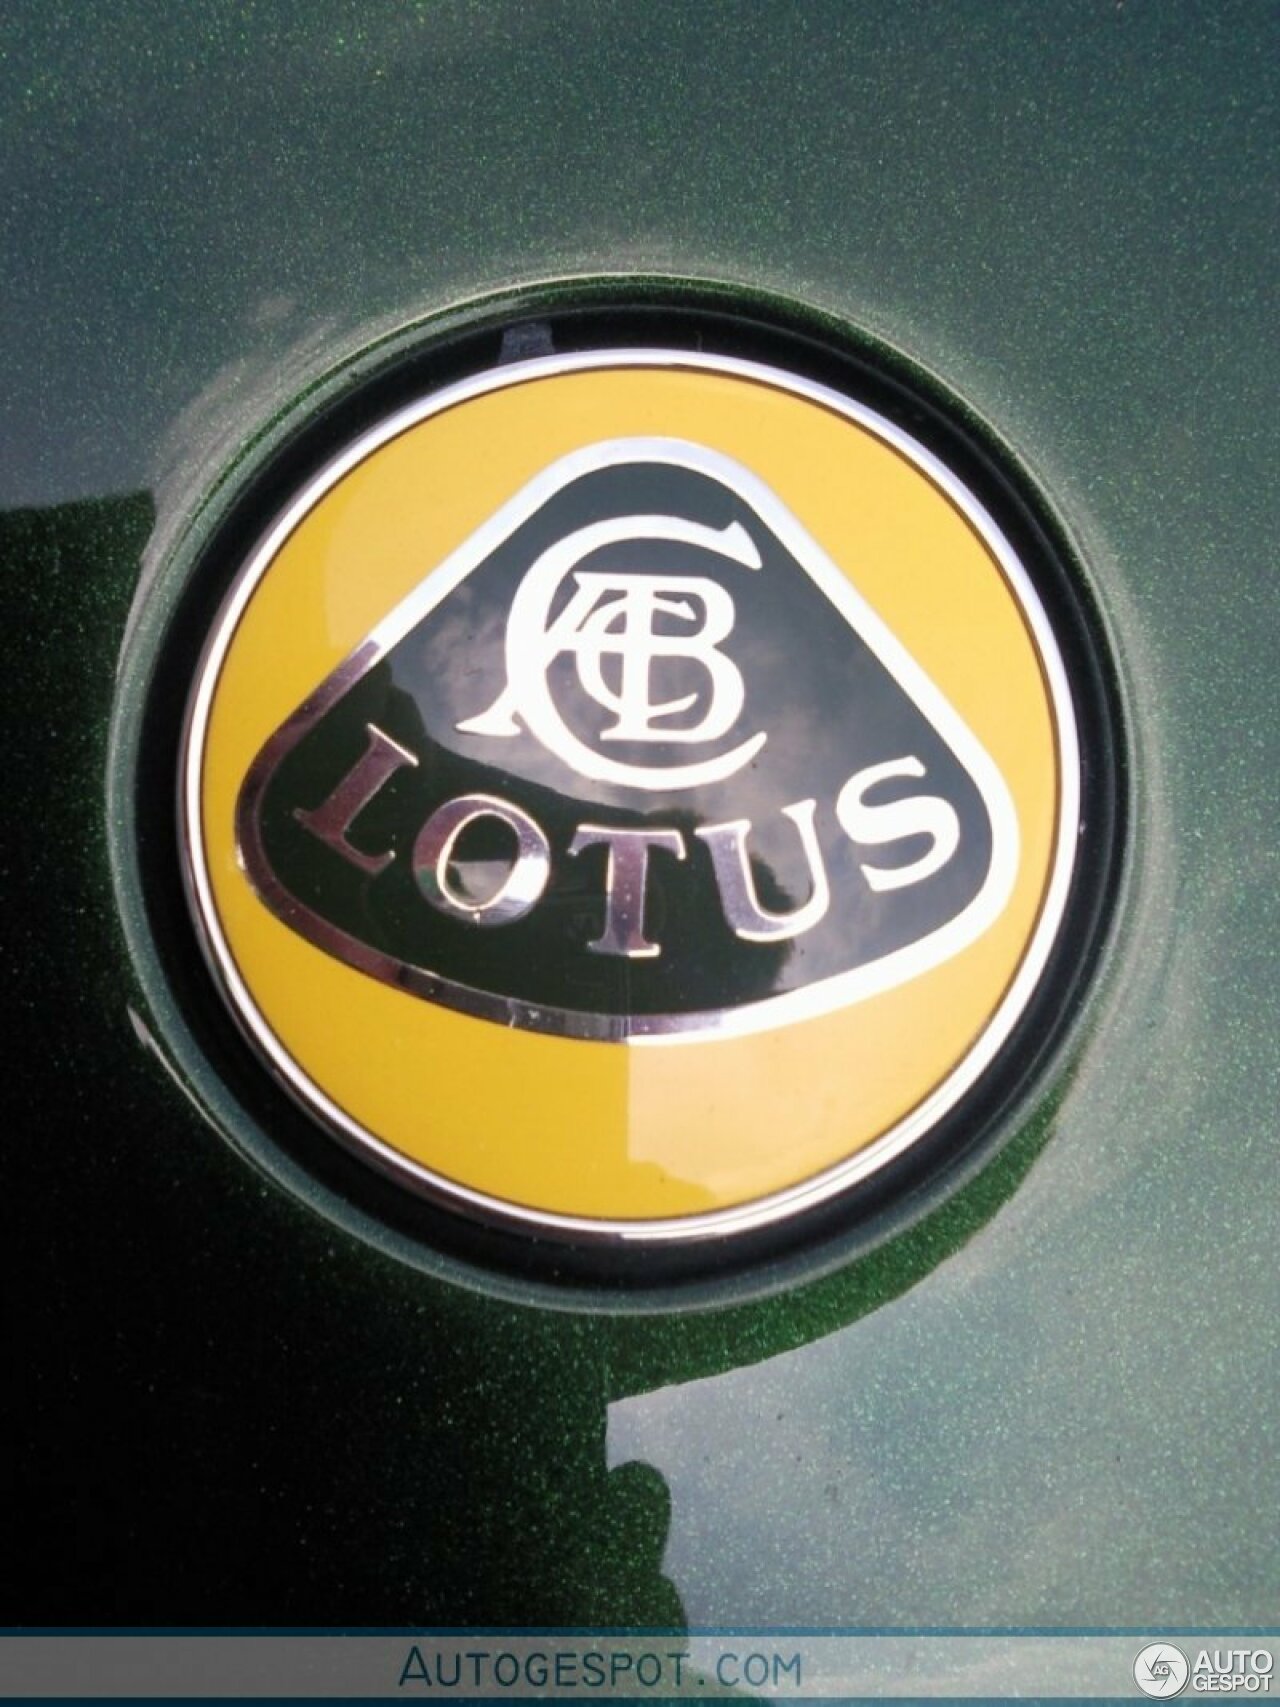 Lotus Europa S